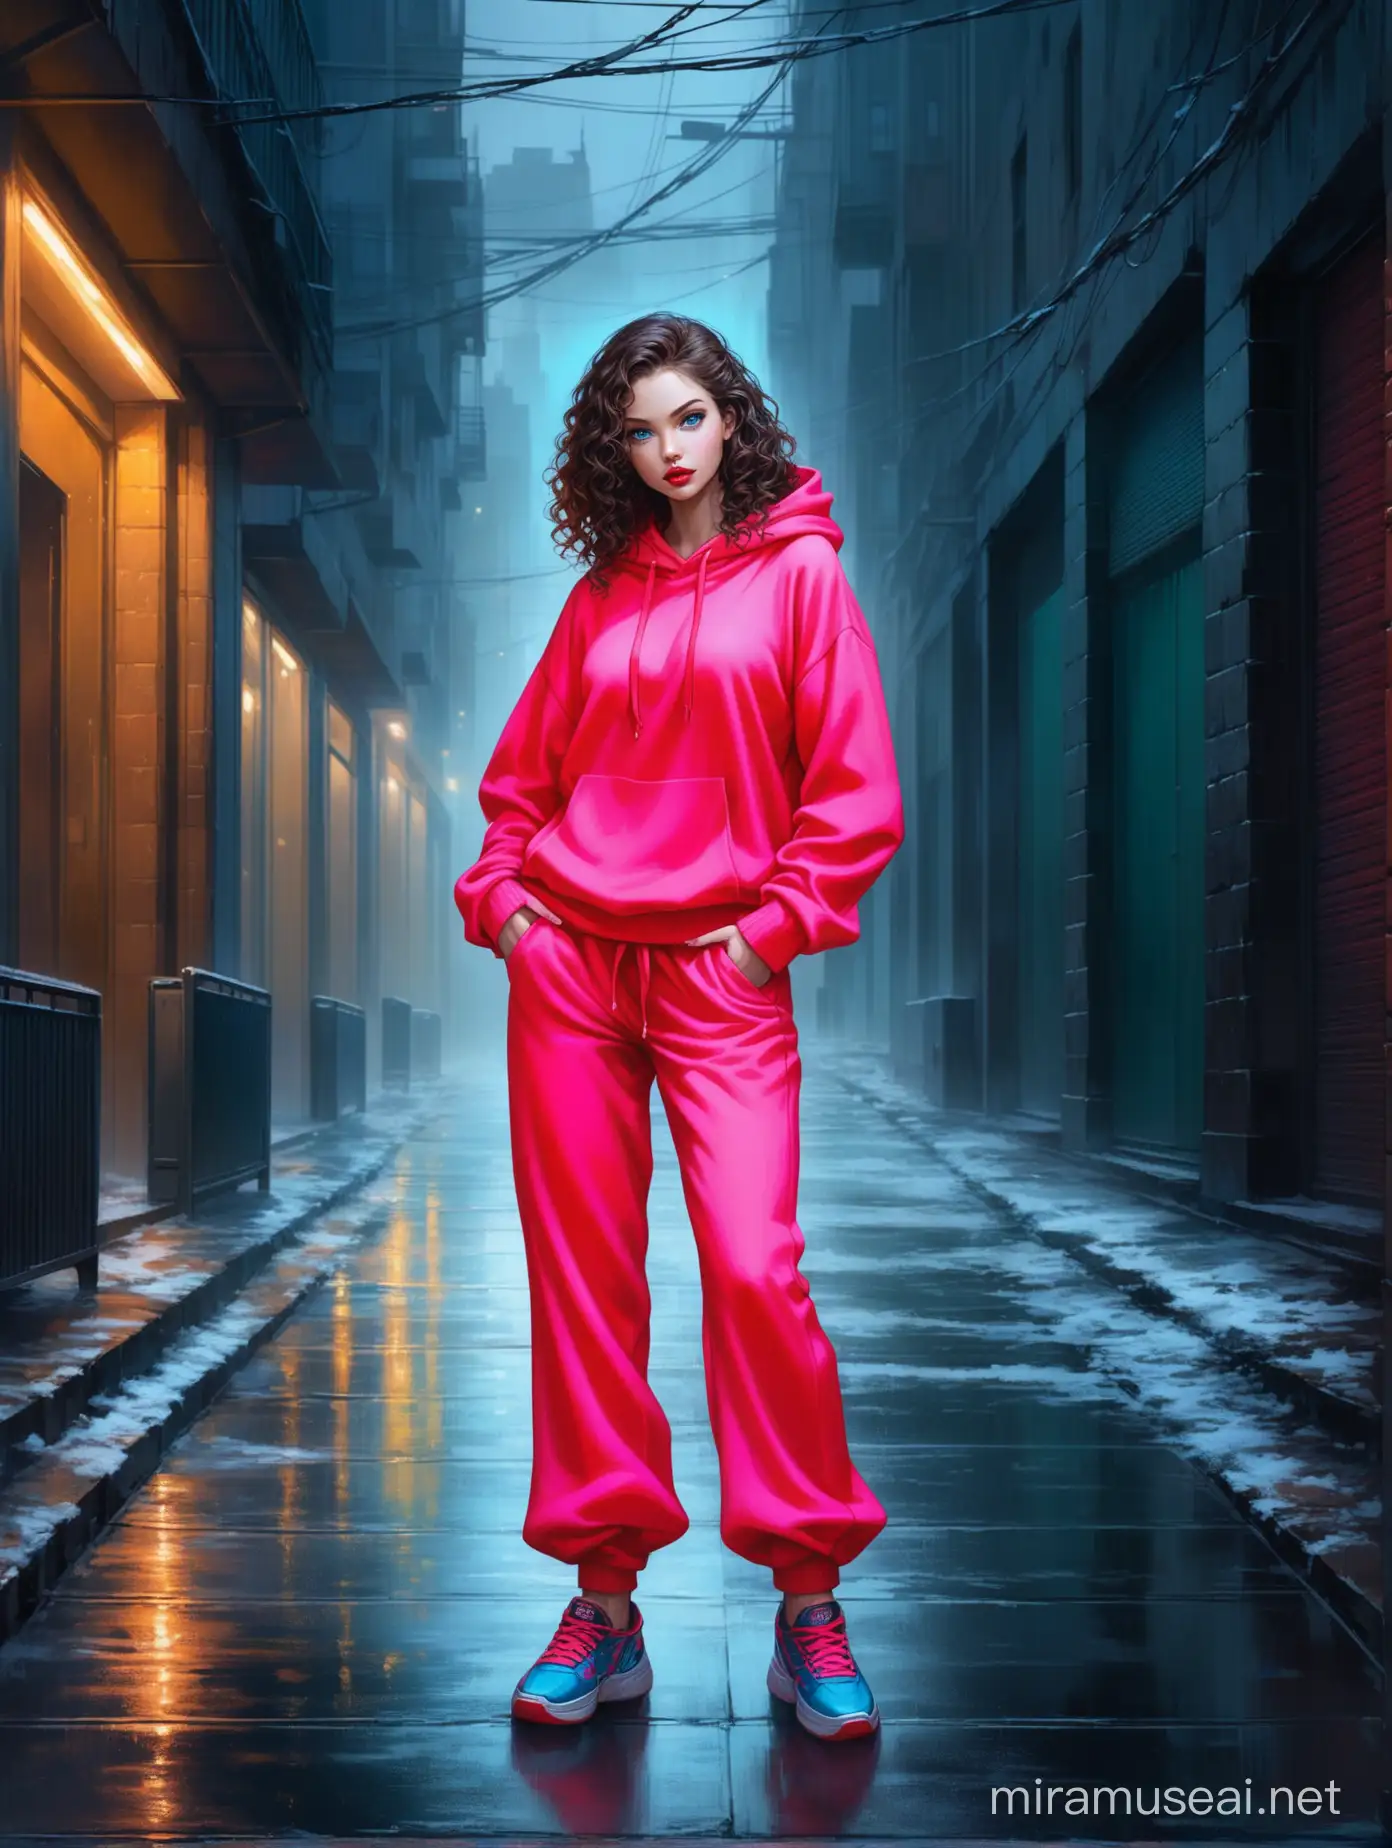 Beautiful Young Woman in Neon Streetwear Expressive Urban Fashion Portrait